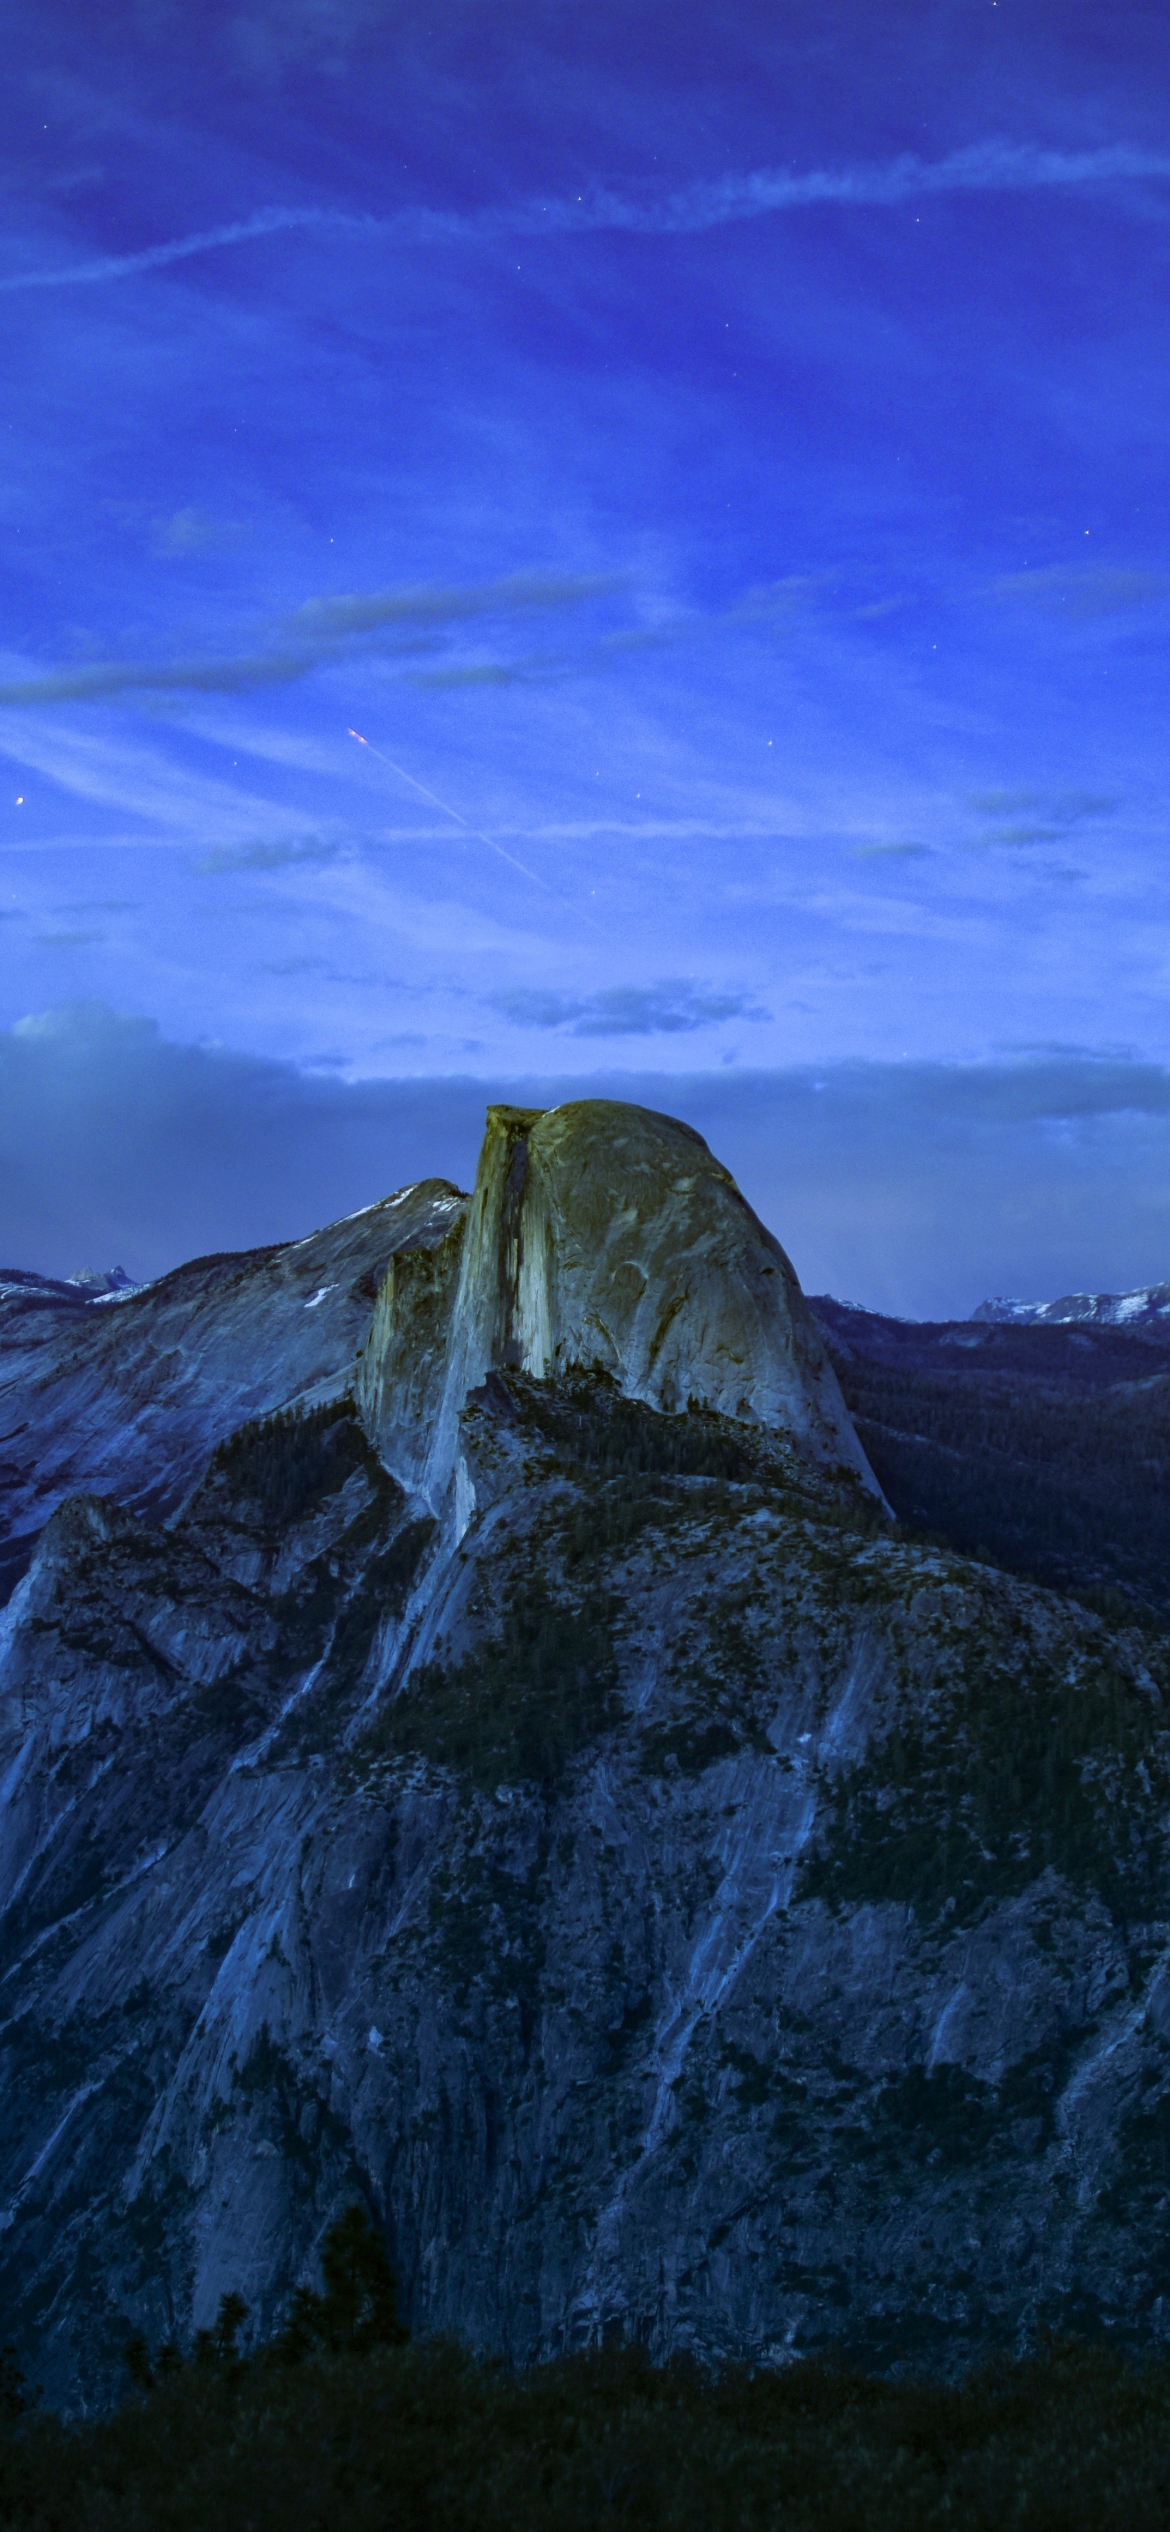 View of Yosemite National Park